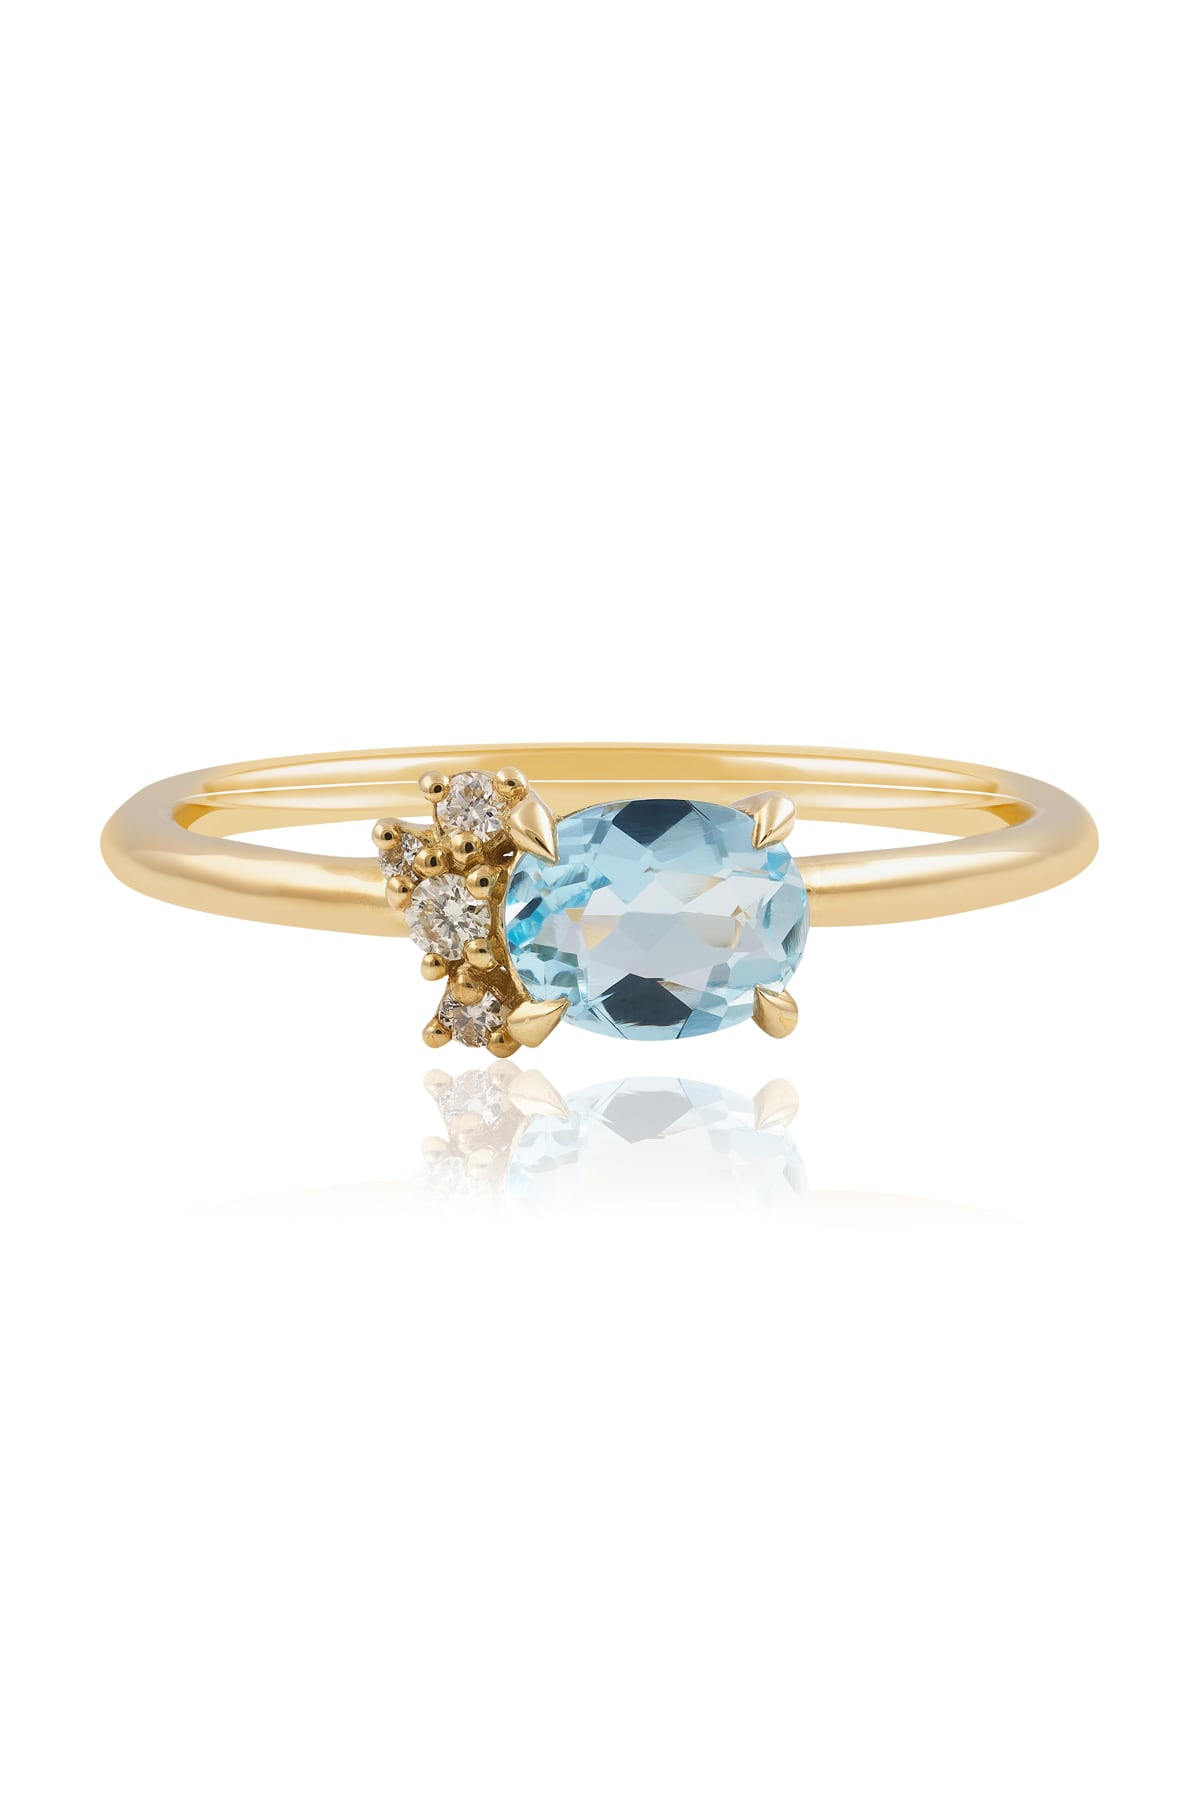 Oval Aquamarine & Diamond Ring Set In Yellow Gold from LeGassick Jewellery.